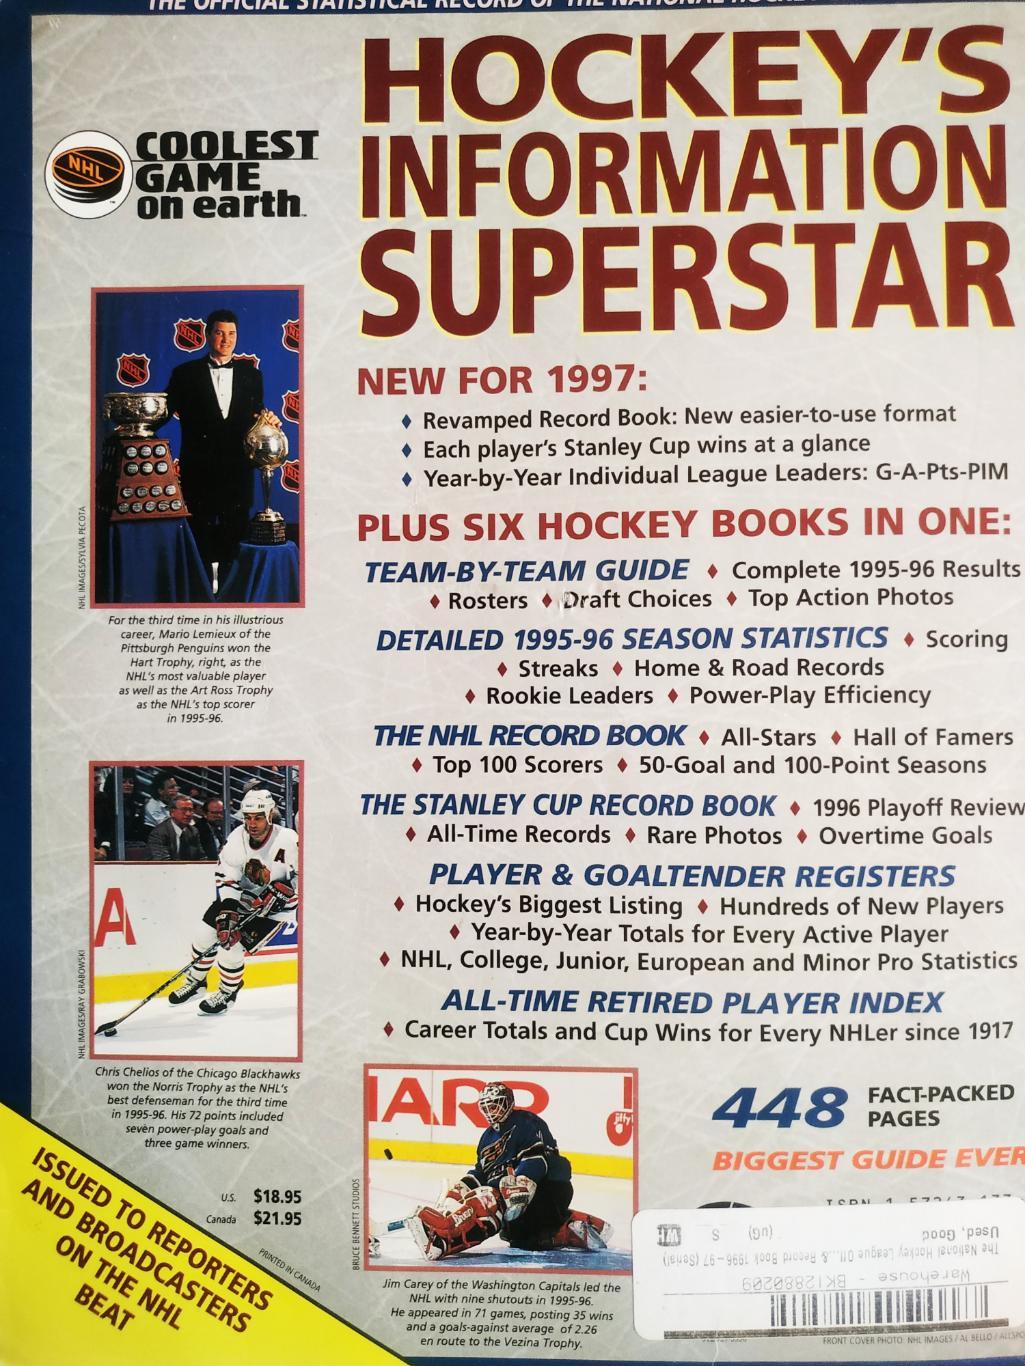 ХОККЕЙ ОФИЦИАЛЬНЫЙ СПРАВОЧНИК НХЛ 1996-97 NHL OFFICIAL GUIDE AND RECORD BOOK 7